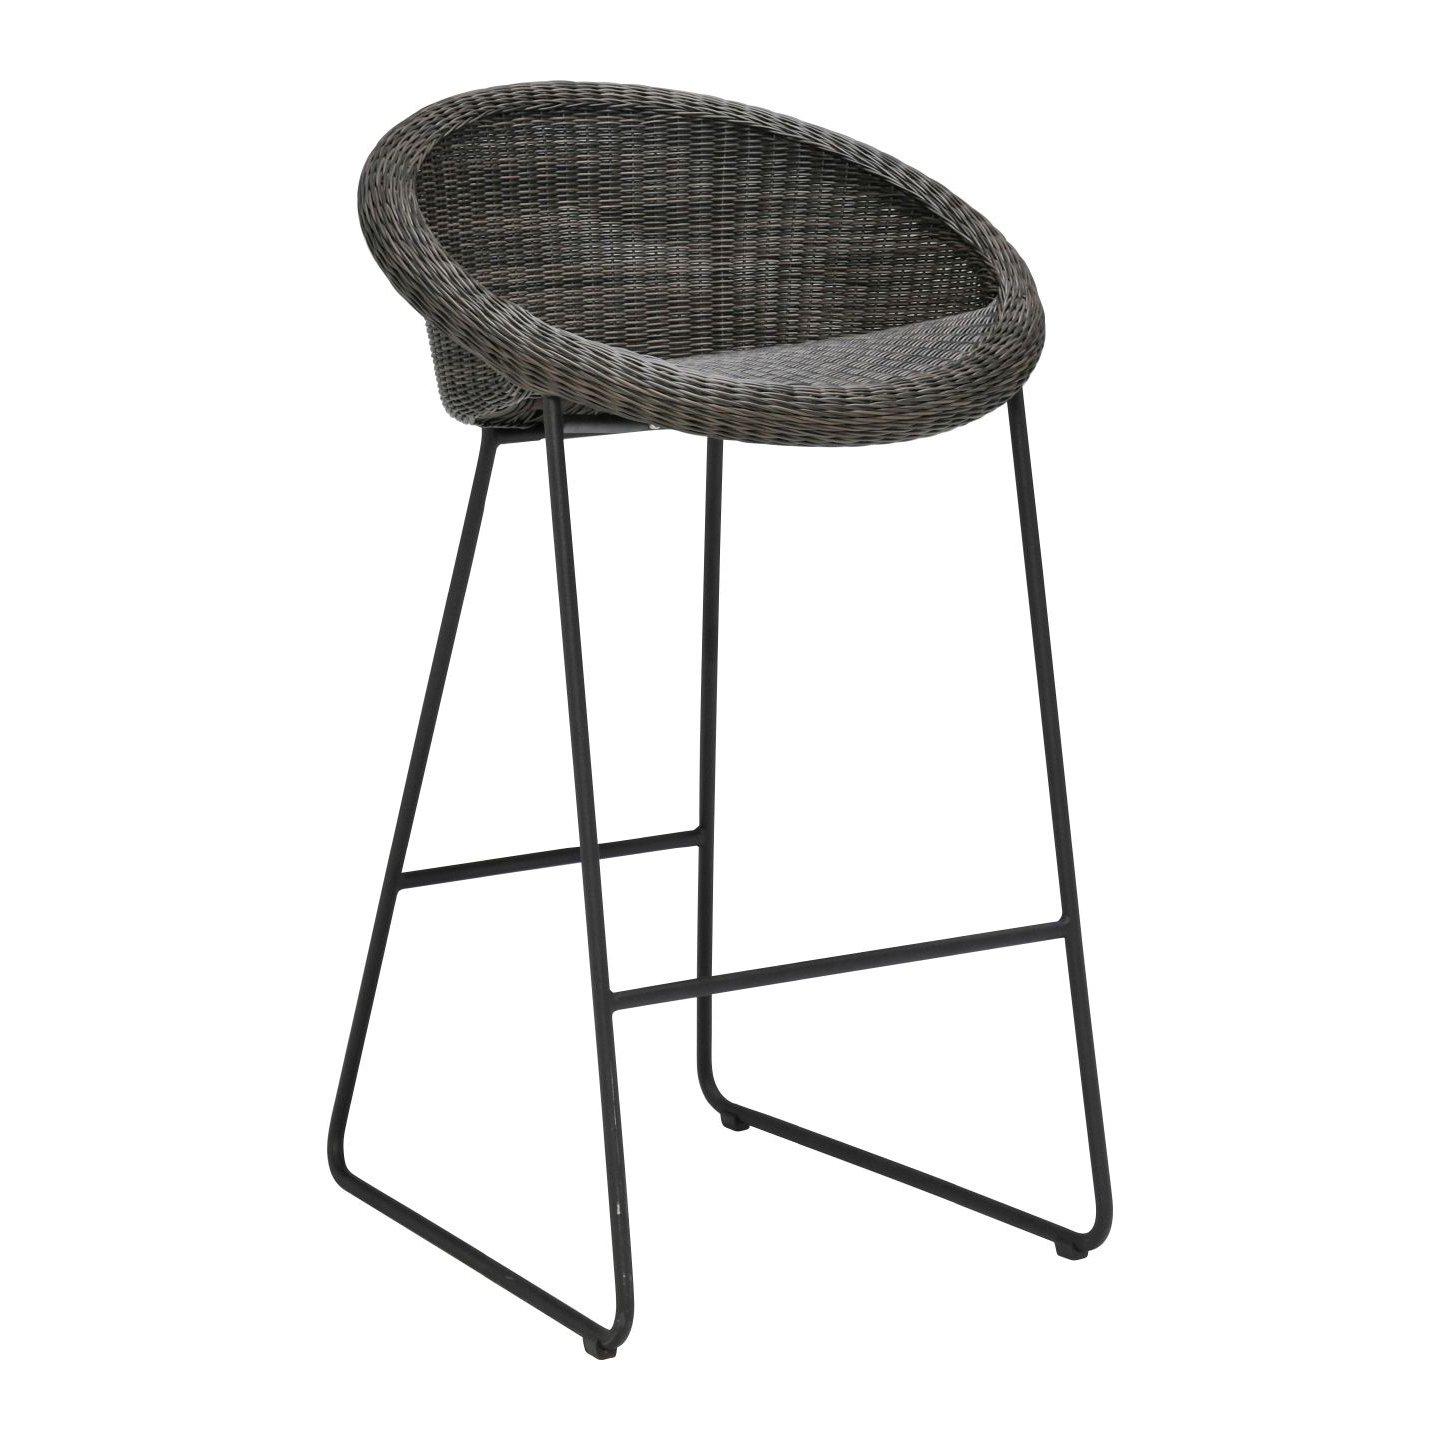 Haworth Gigi II stool in black color with metal legs